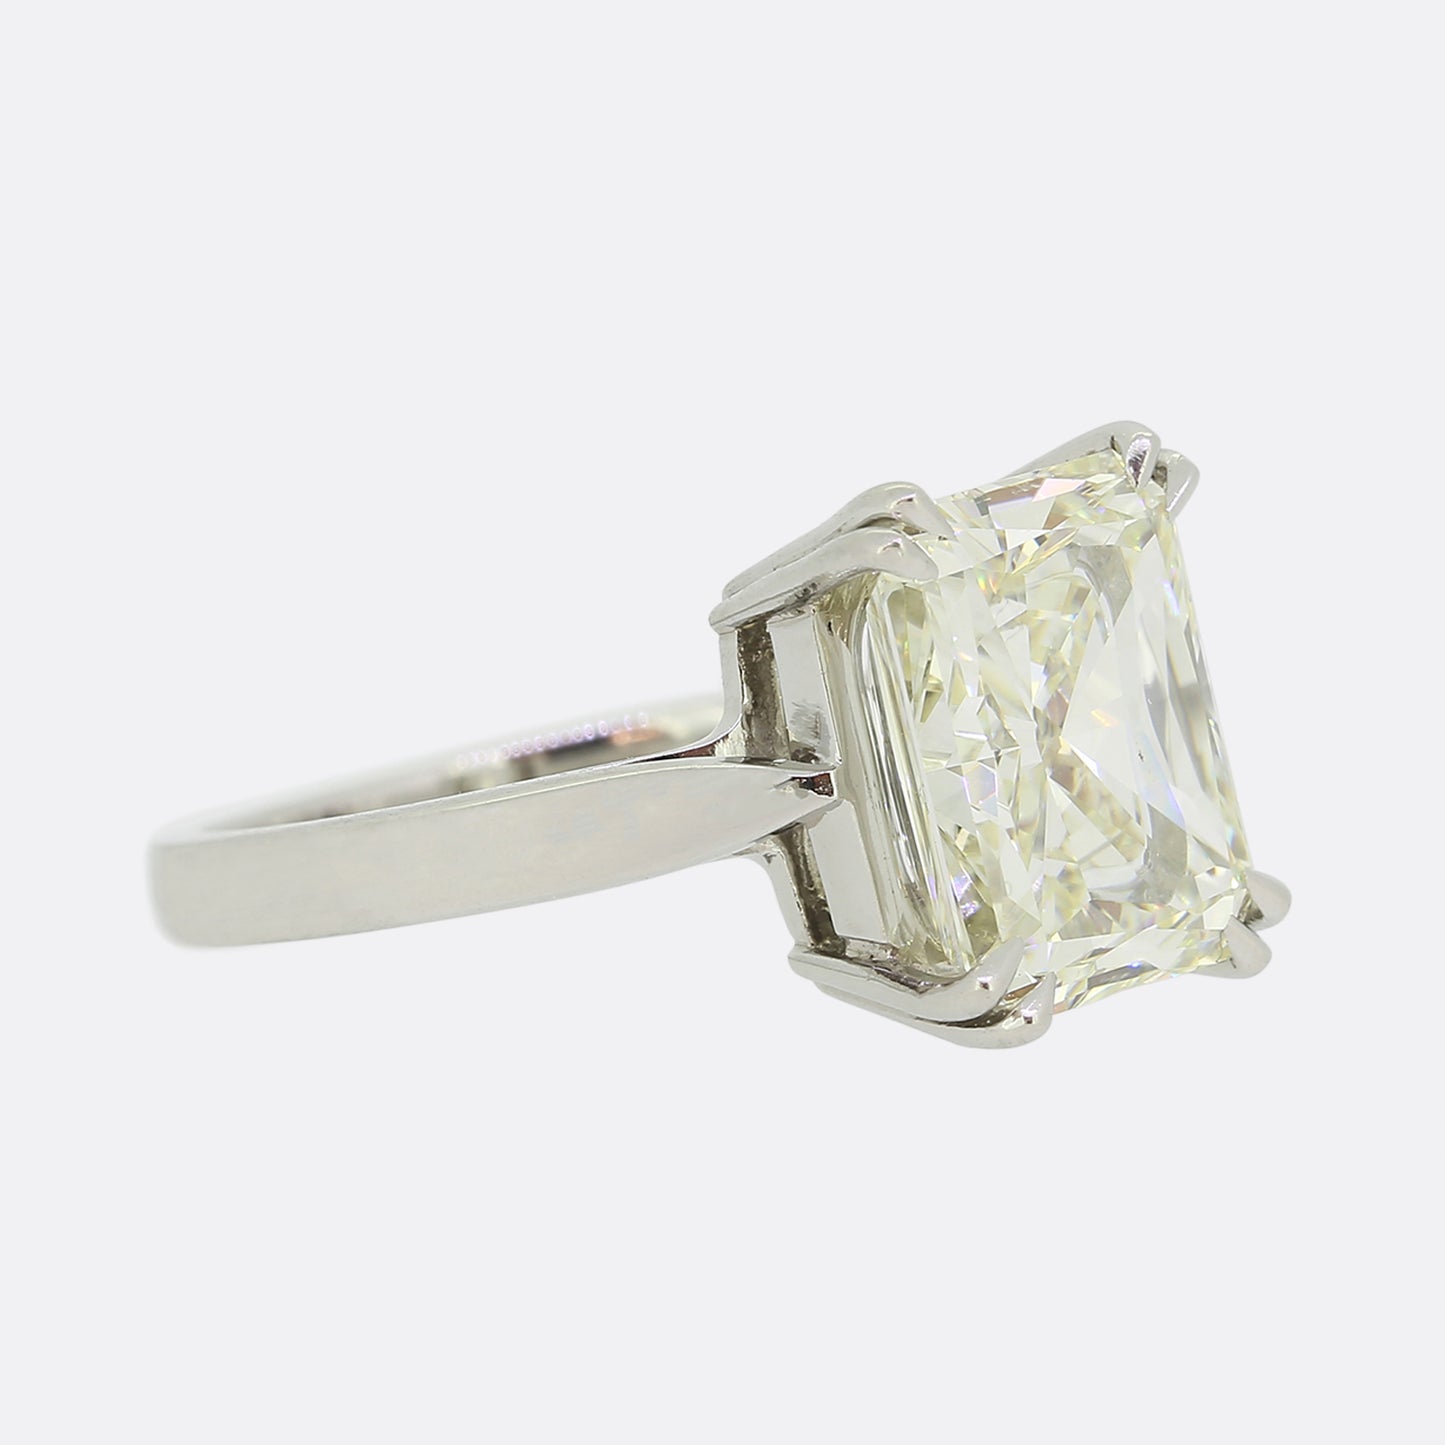 4.02 Carat Radiant Cut Diamond Solitaire Engagement Ring